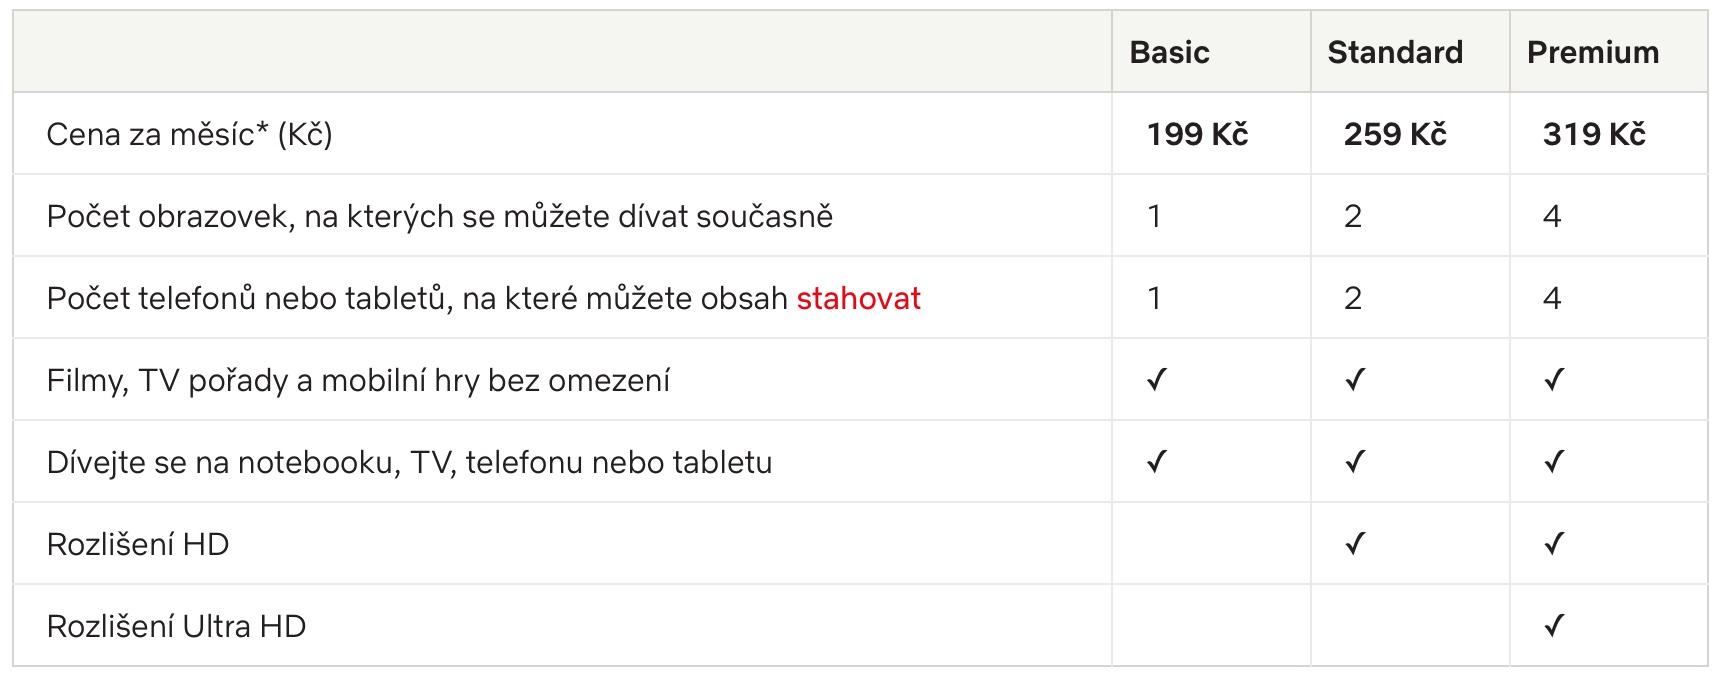 Price list of Netflix in the Czech Republic